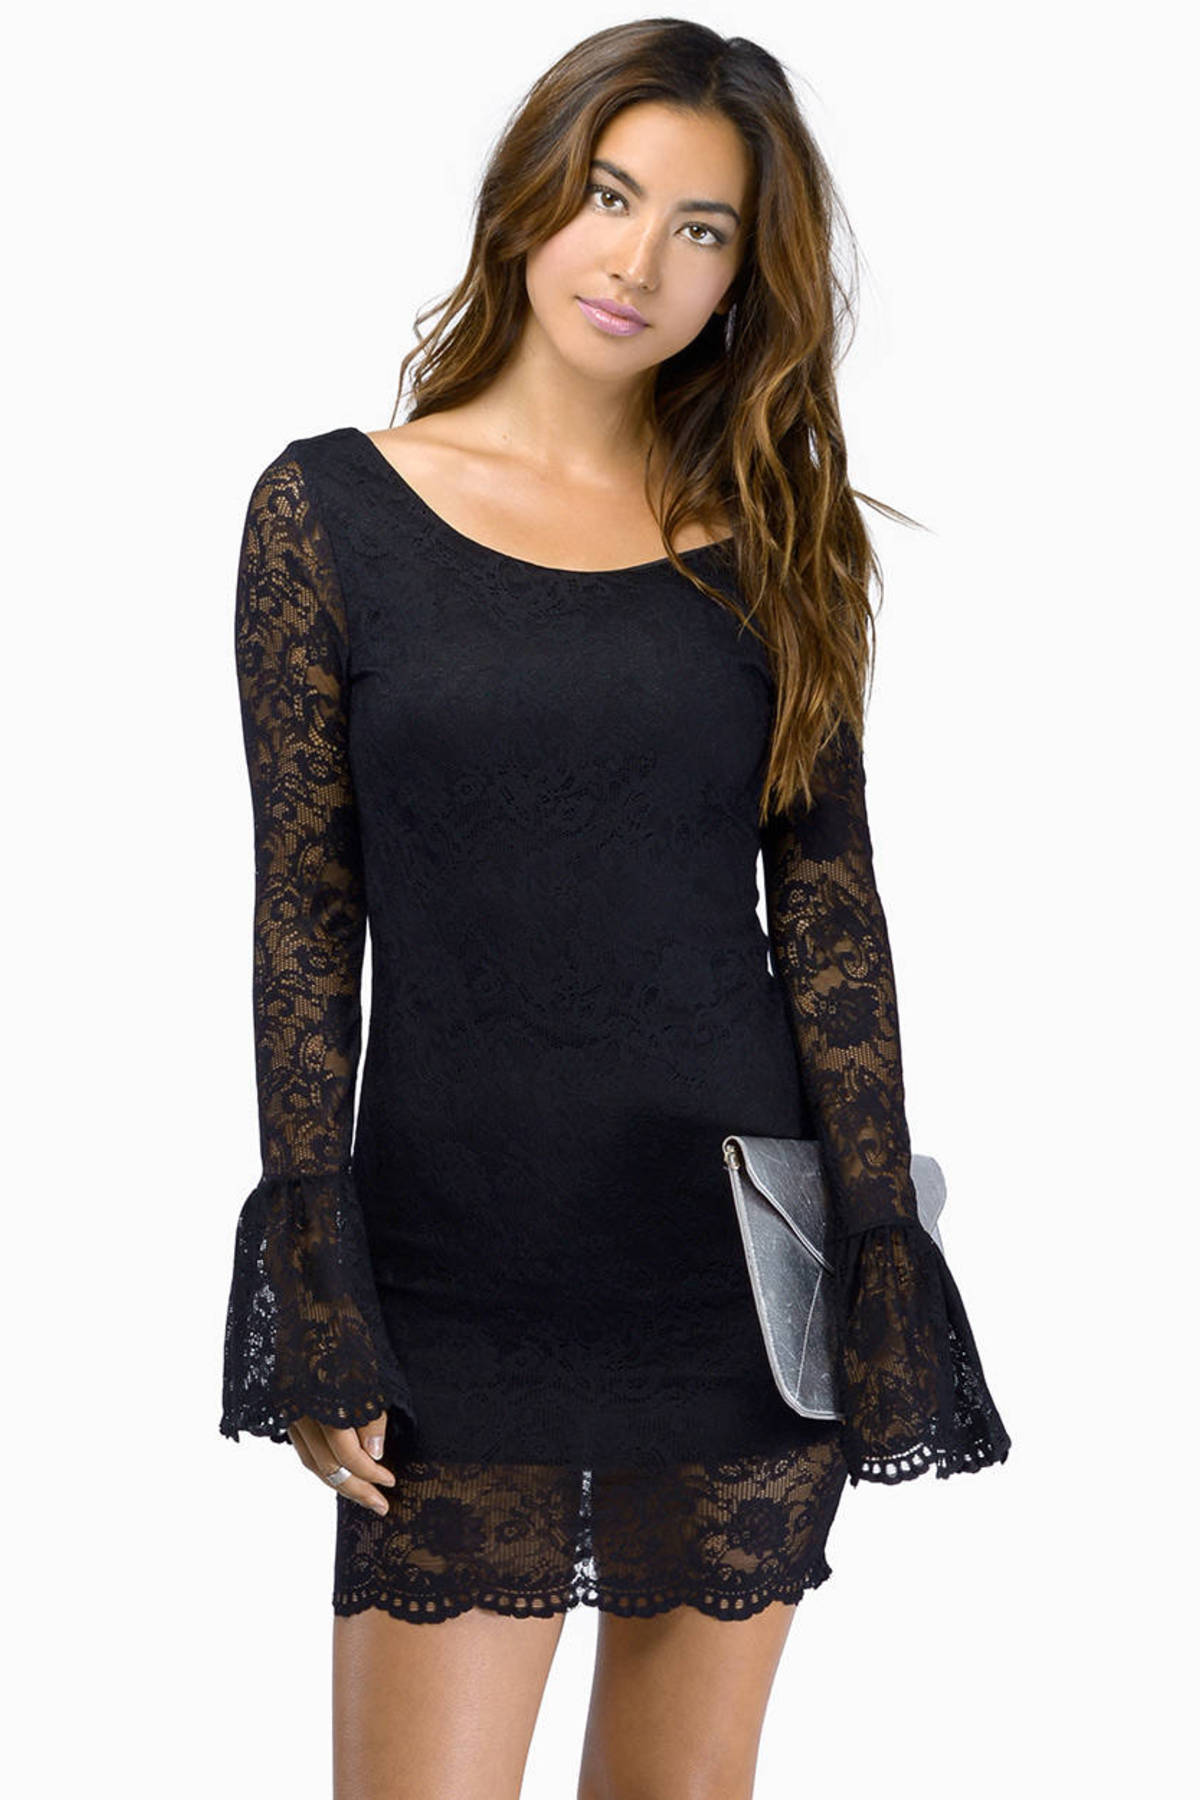 Embrace Lace Dress in Black - $16 | Tobi US